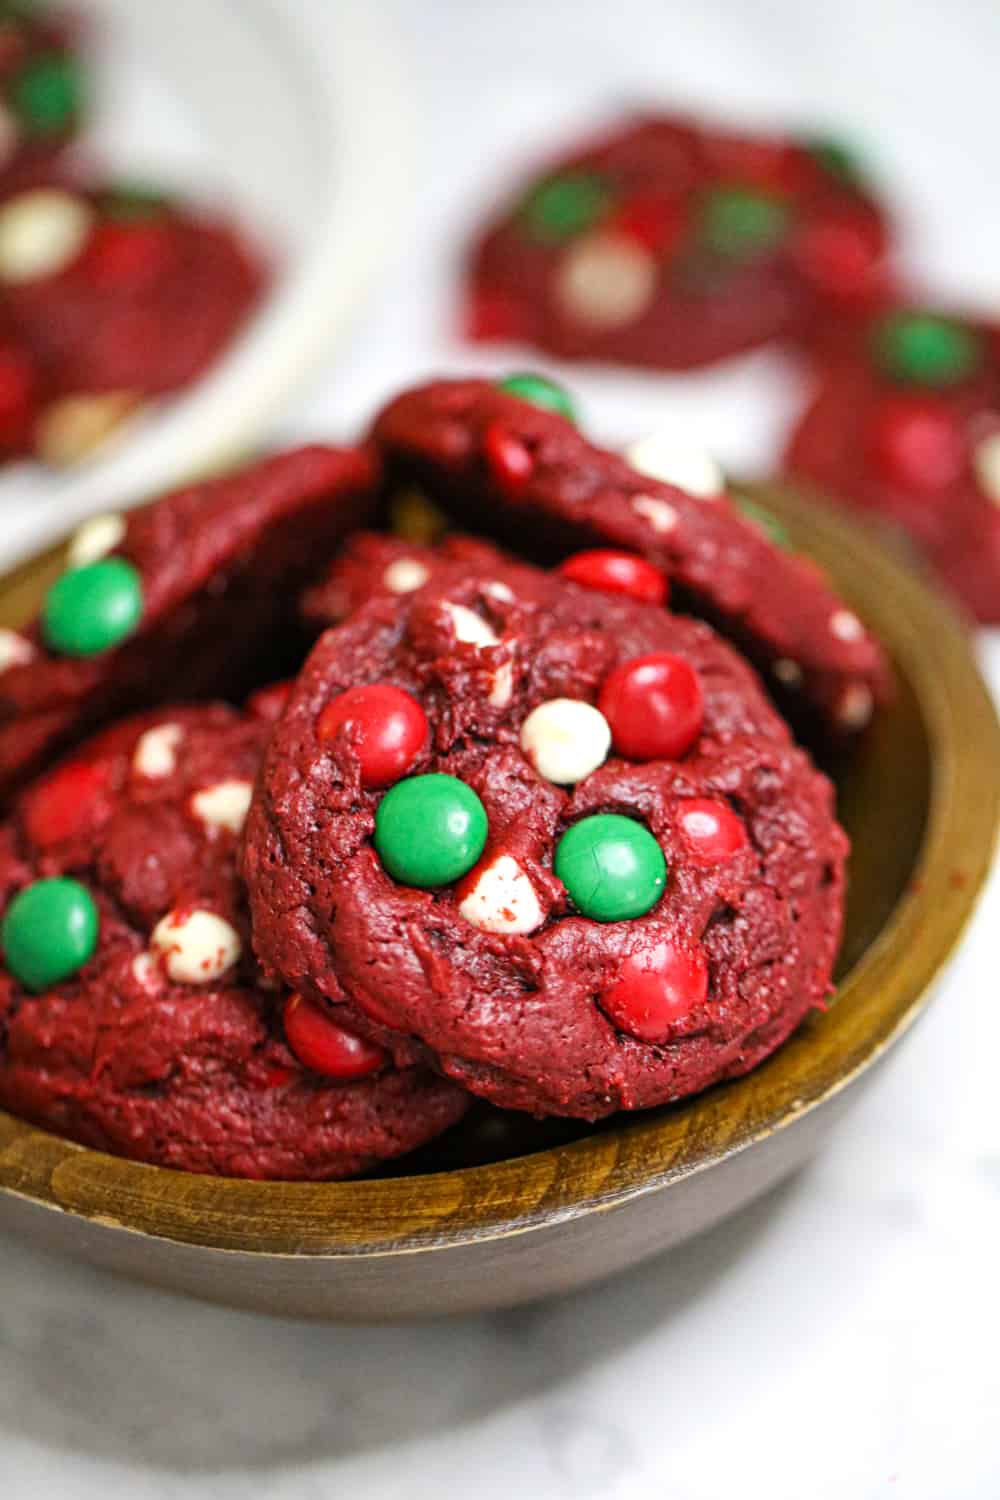 santa cookies